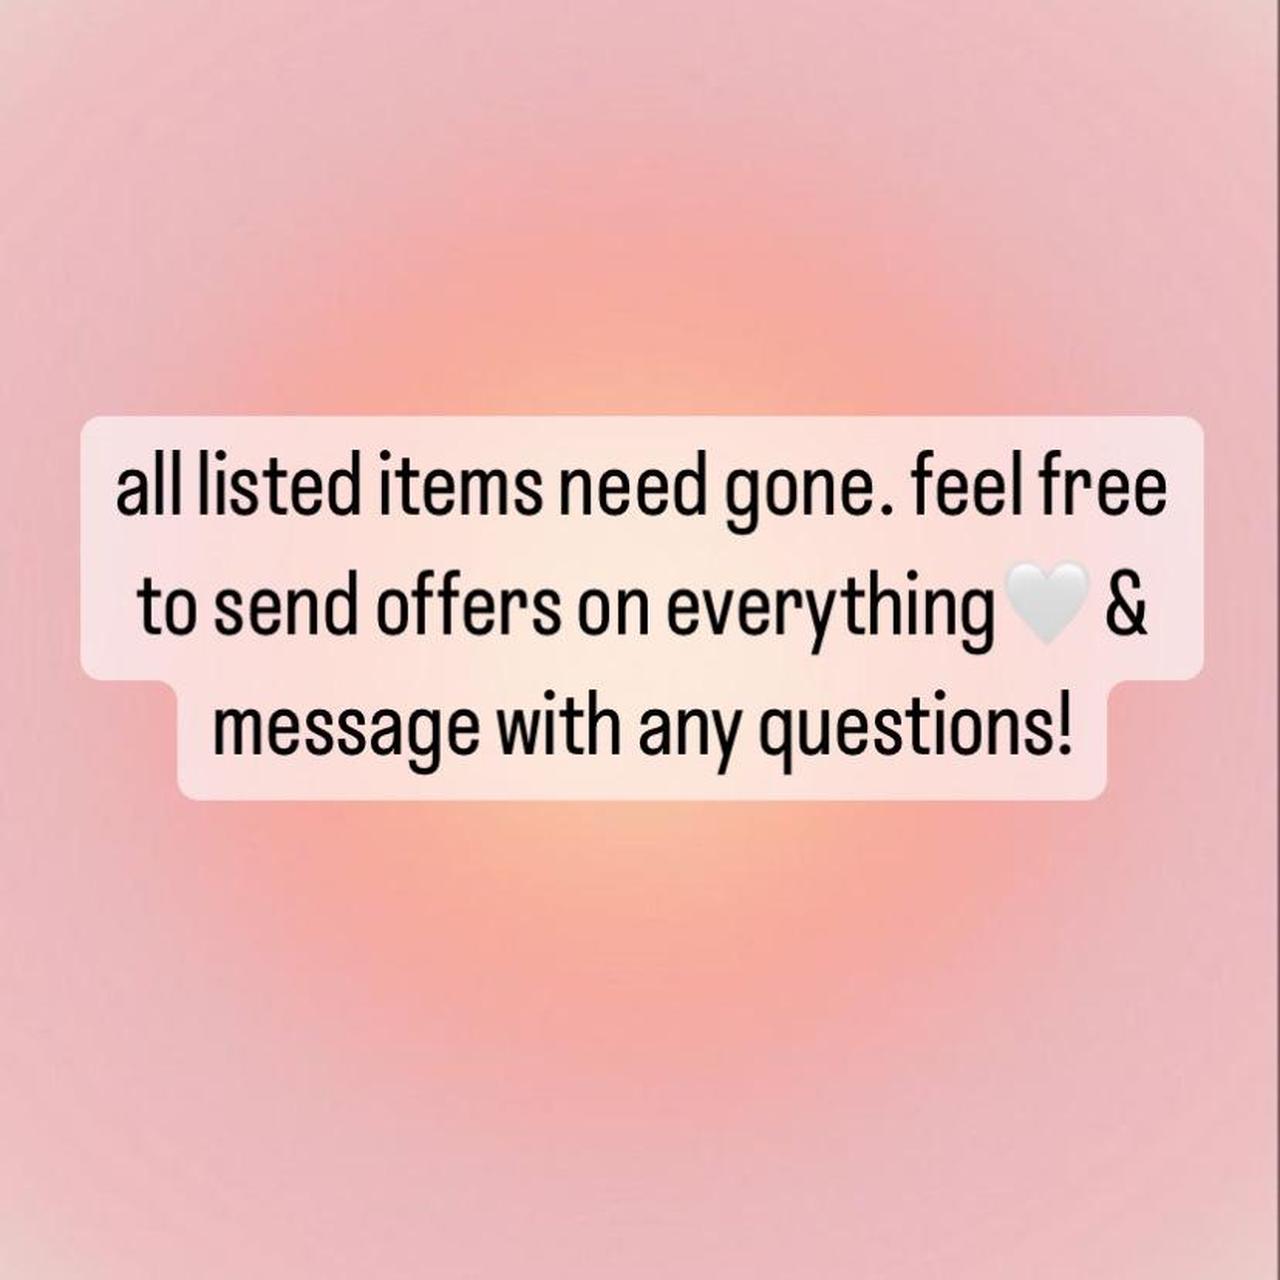 closet getting full, send offers on stuff you... - Depop